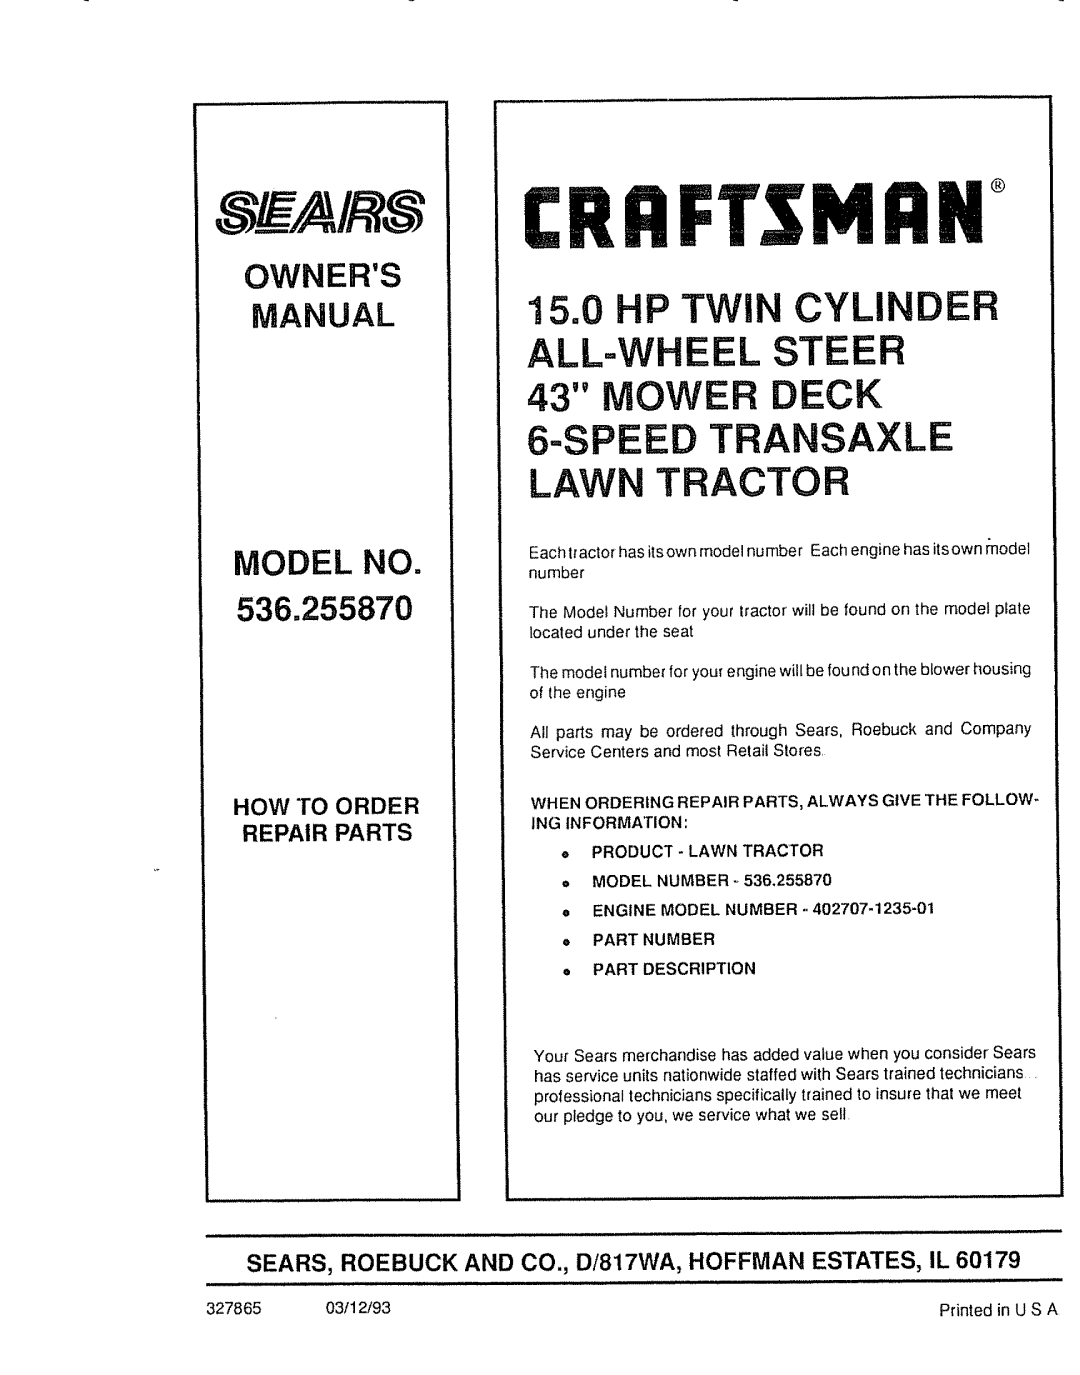 Sears 536.25587 Crrftsmrii, 15.0HP TWI CYL! DER ALL=WHEEL STEER 43 MOWER DECK, How To Order Repair Parts, Owners Manual 